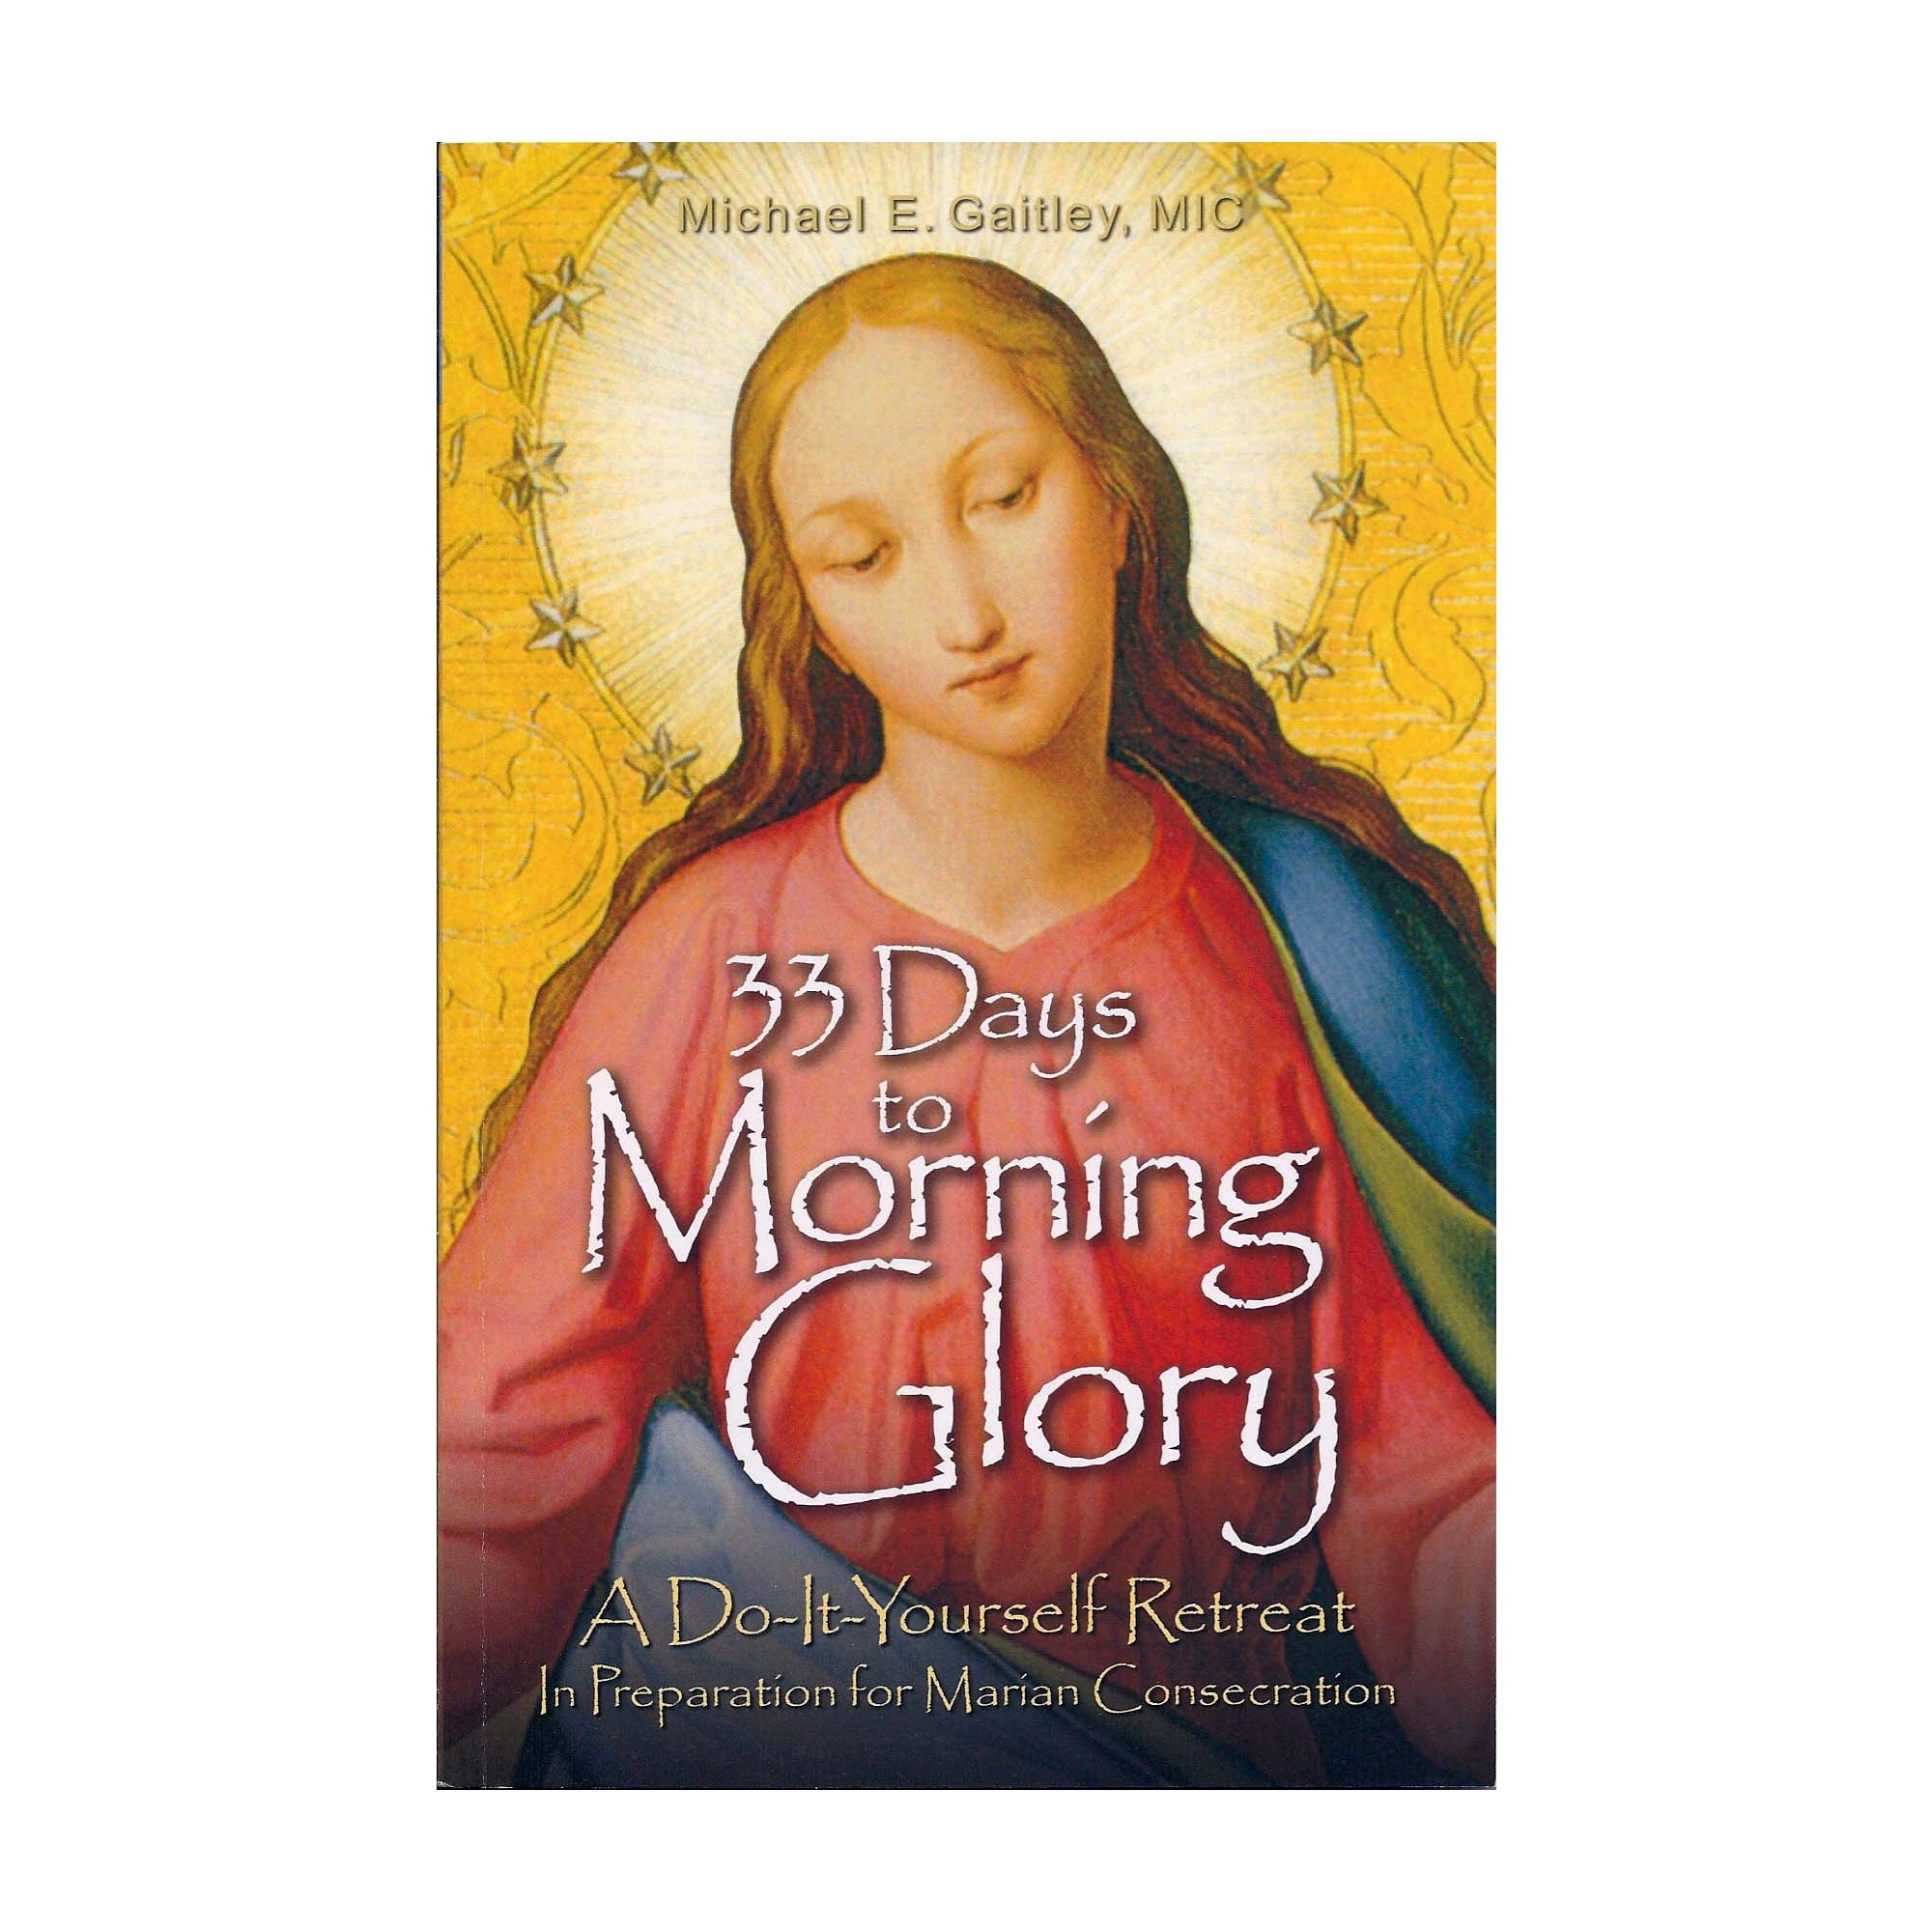 33 days to morning glory pdf free download